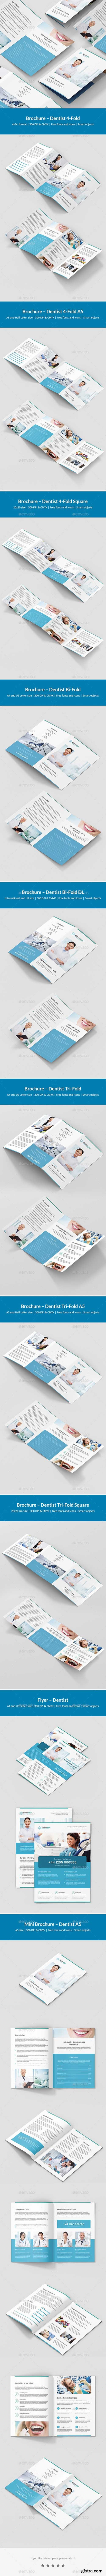 Dentist – Brochures Bundle Print Templates 10 in 1 21334477